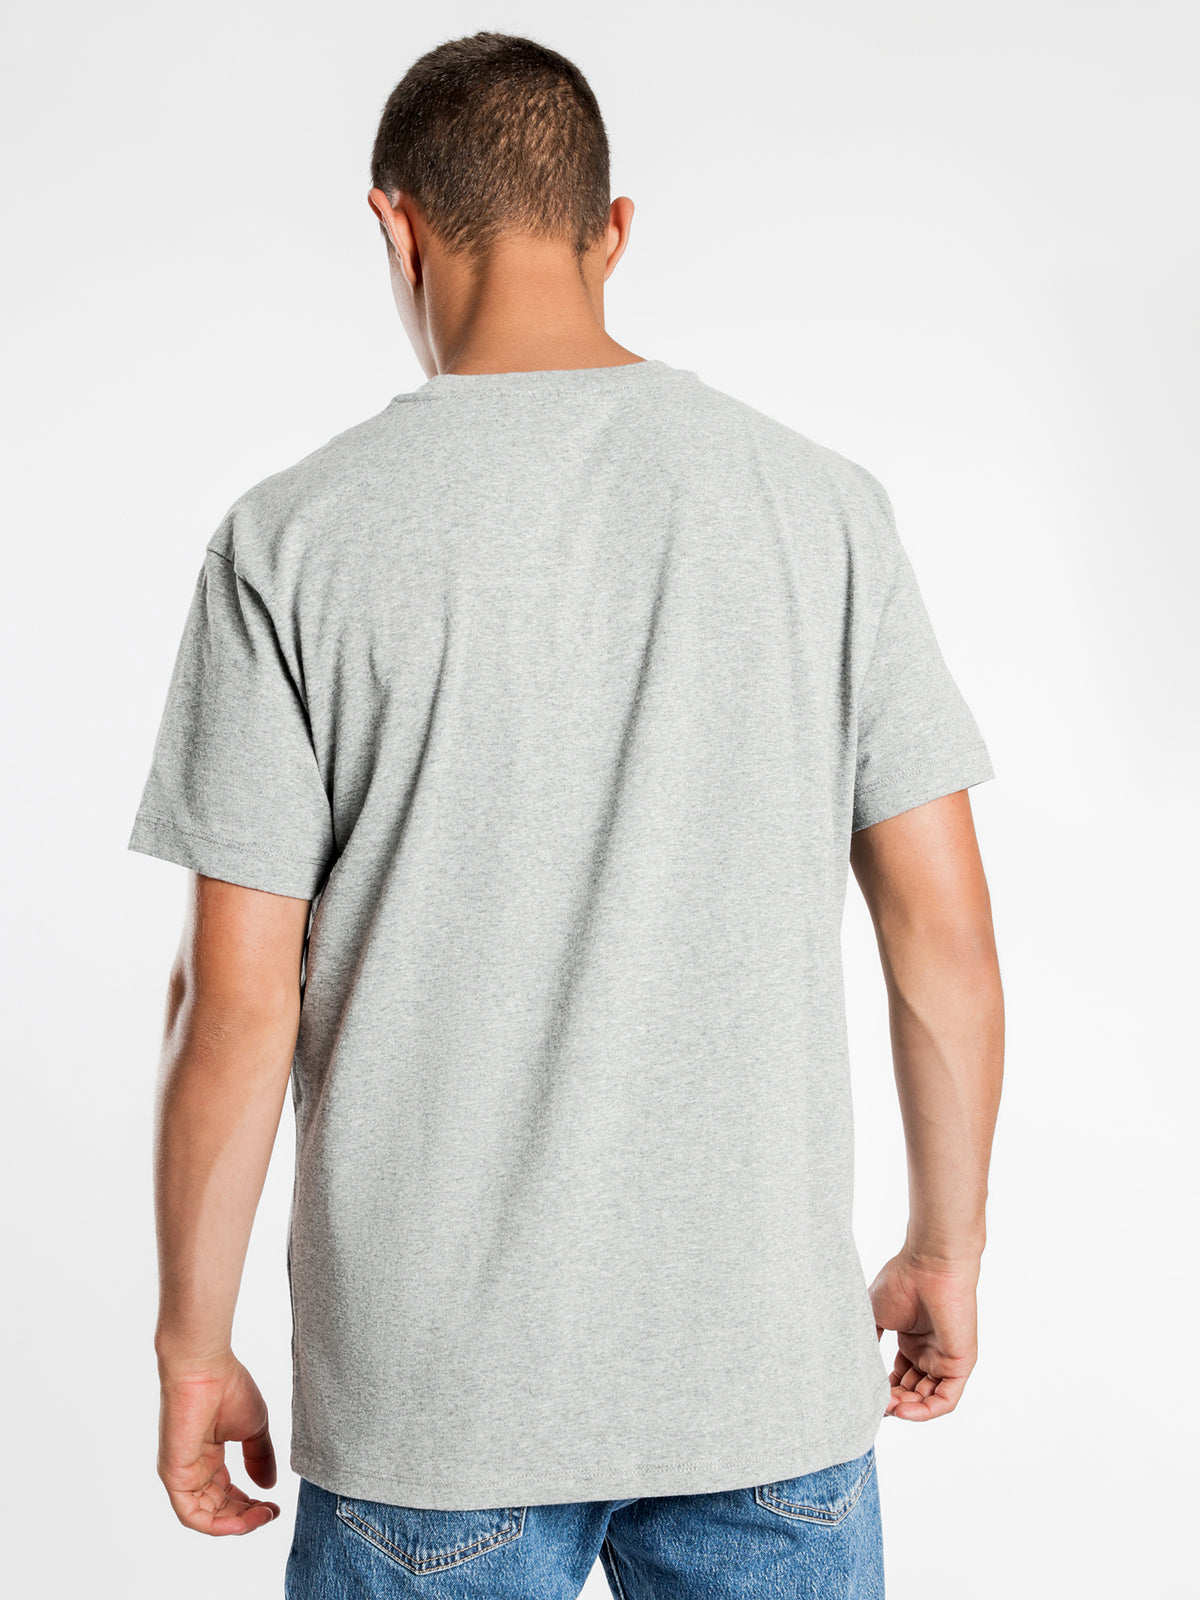 Sase Short Sleeve T-Shirt in Grey